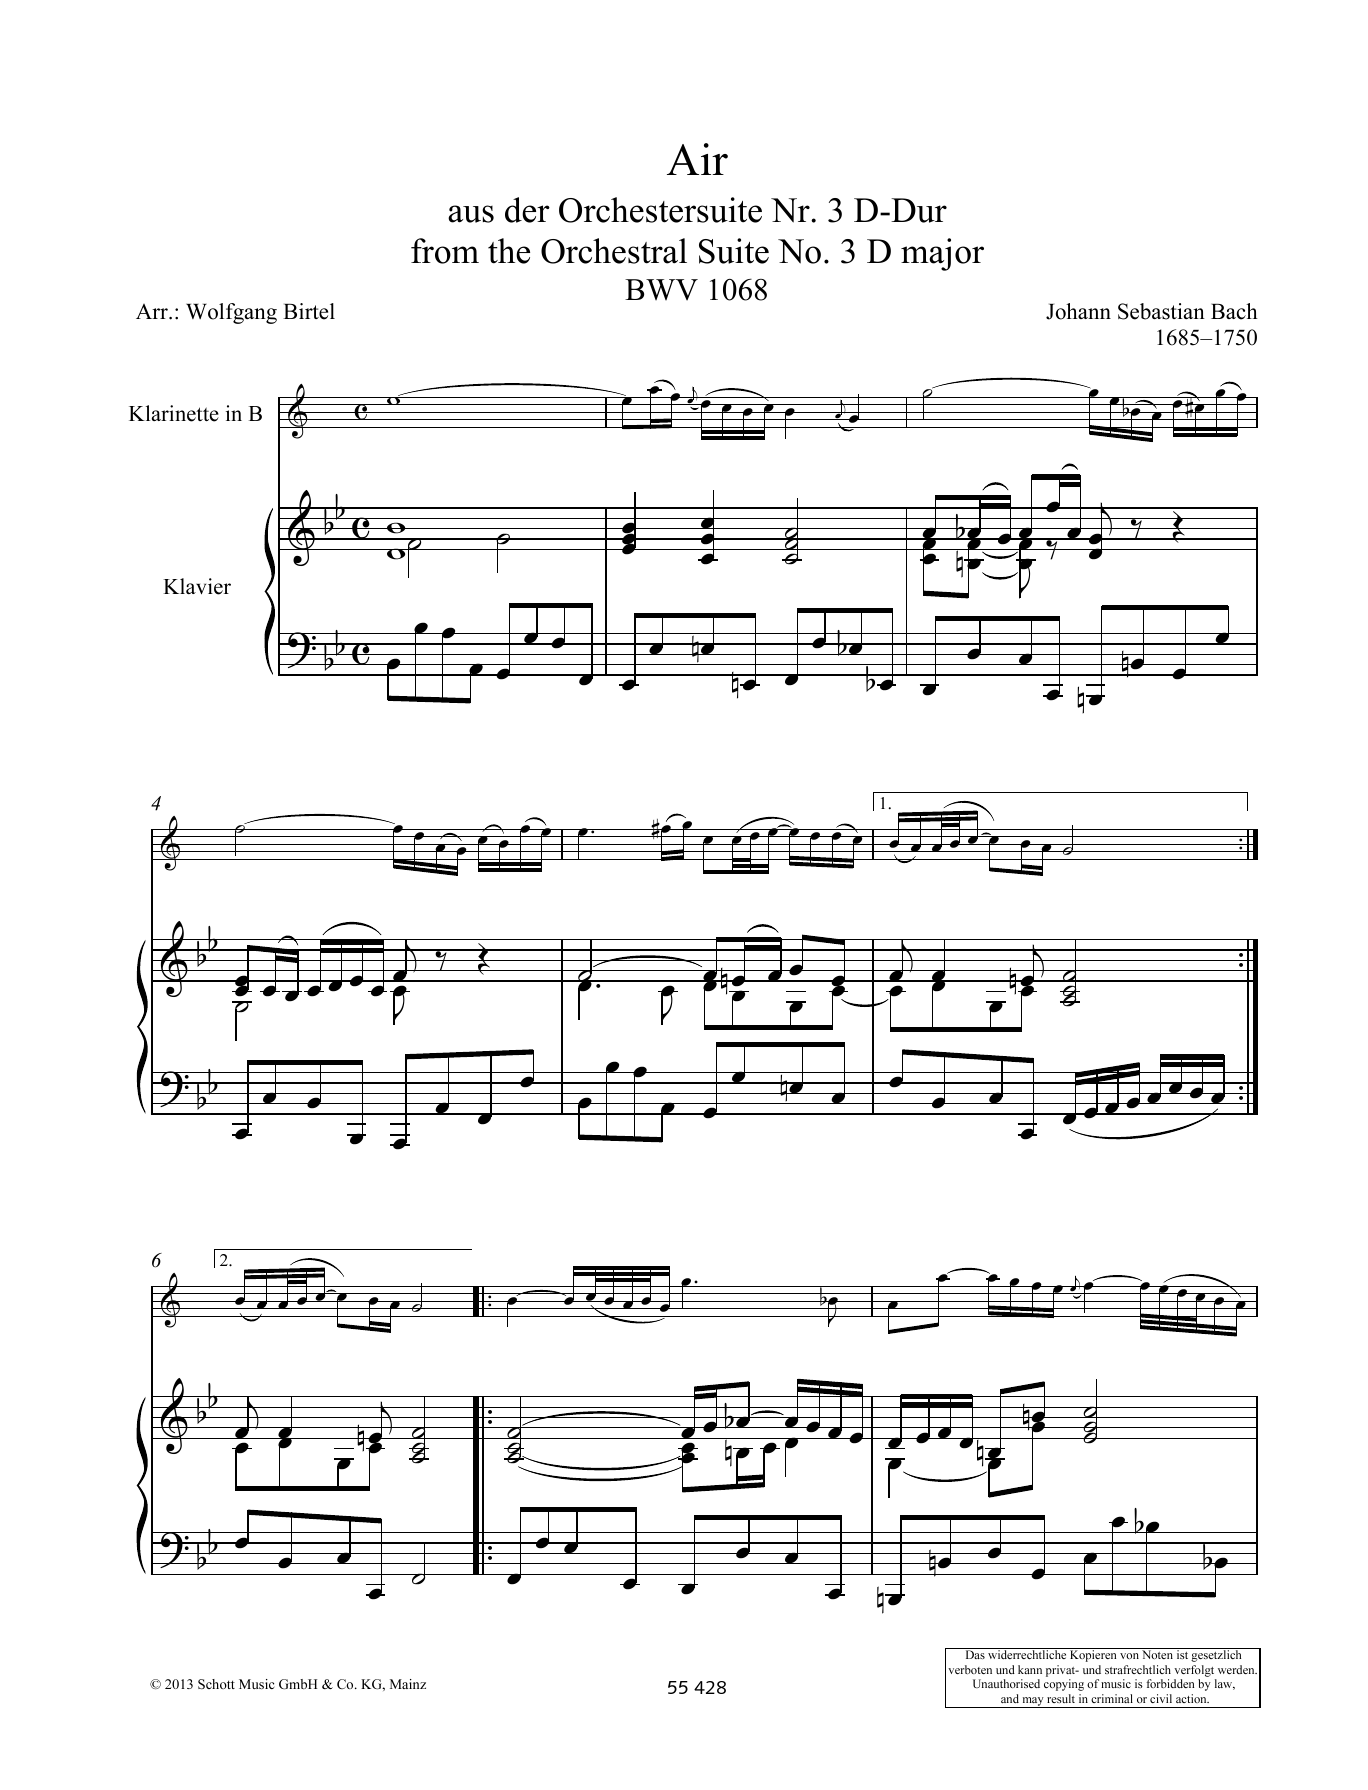 Download Johann Sebastian Bach Air Sheet Music